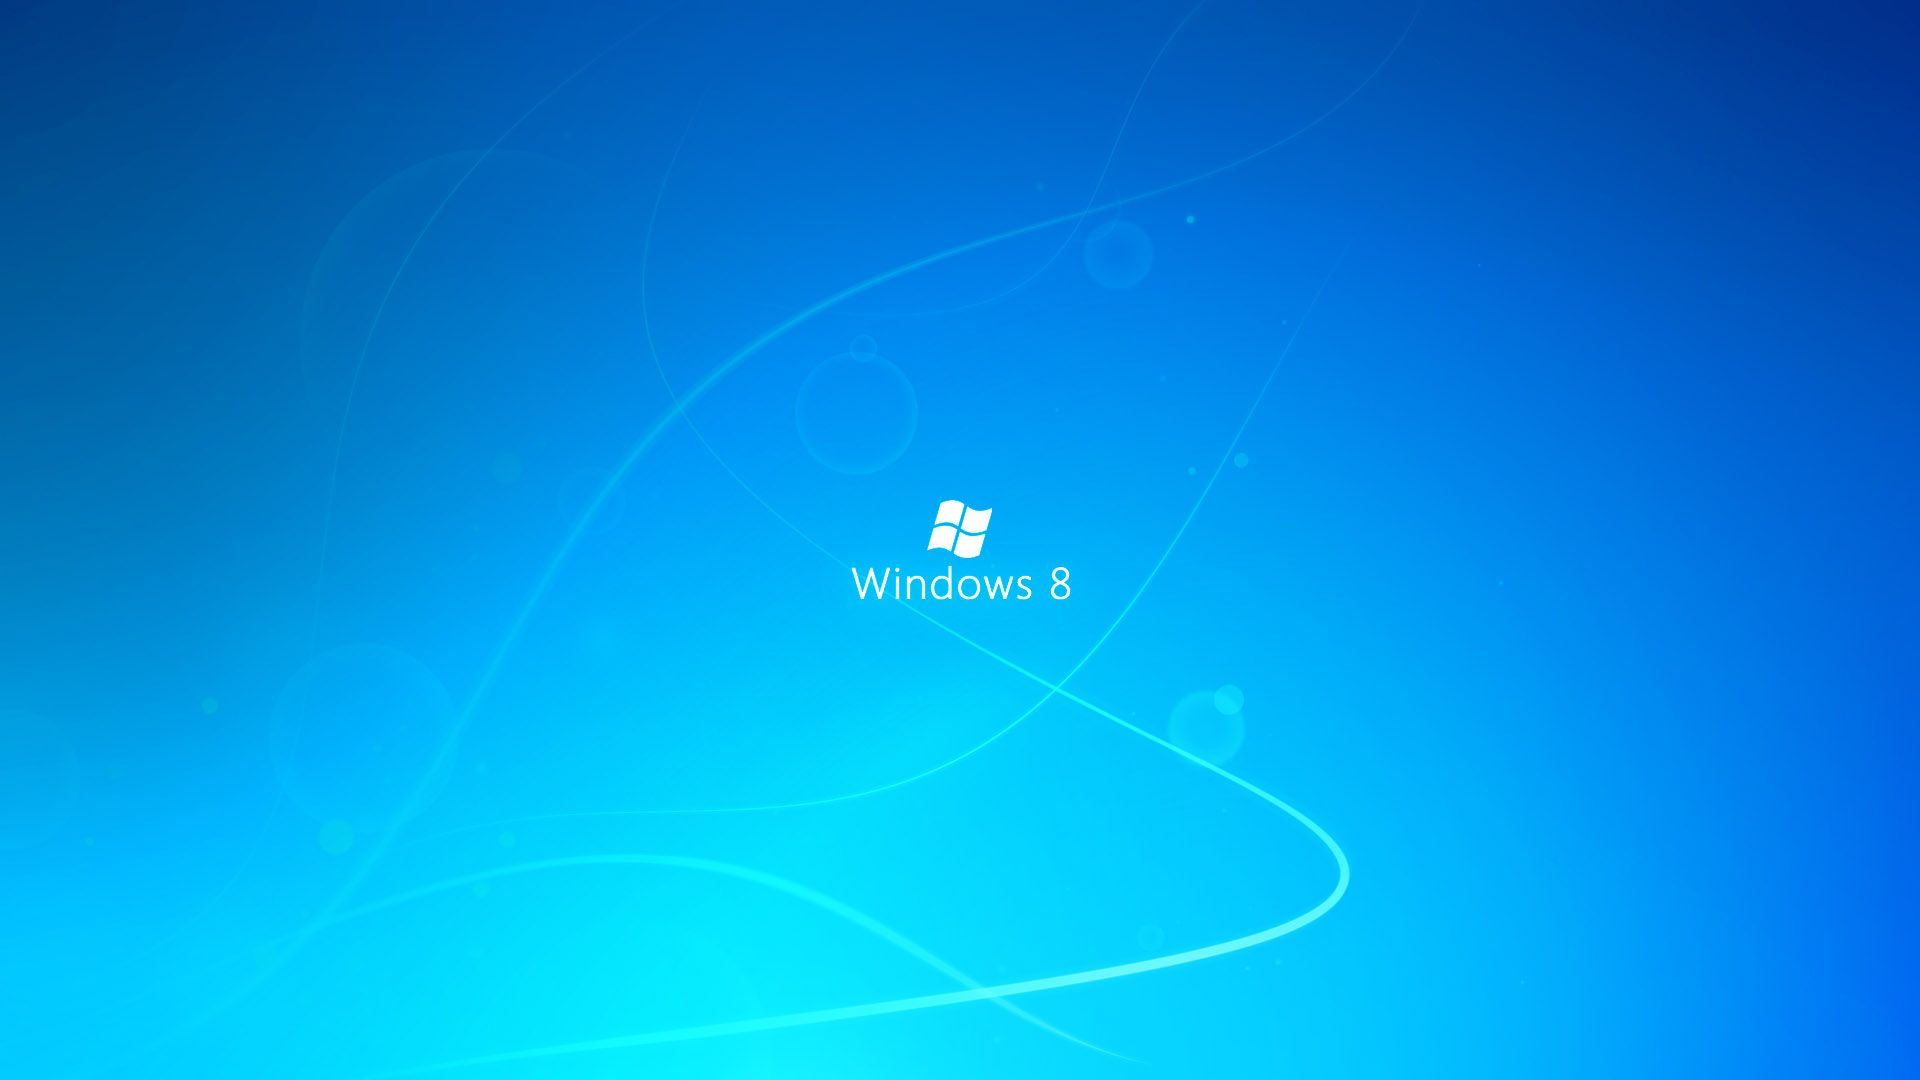 Windows 8 Blue Wallpaper 1920x1080 - 1530431